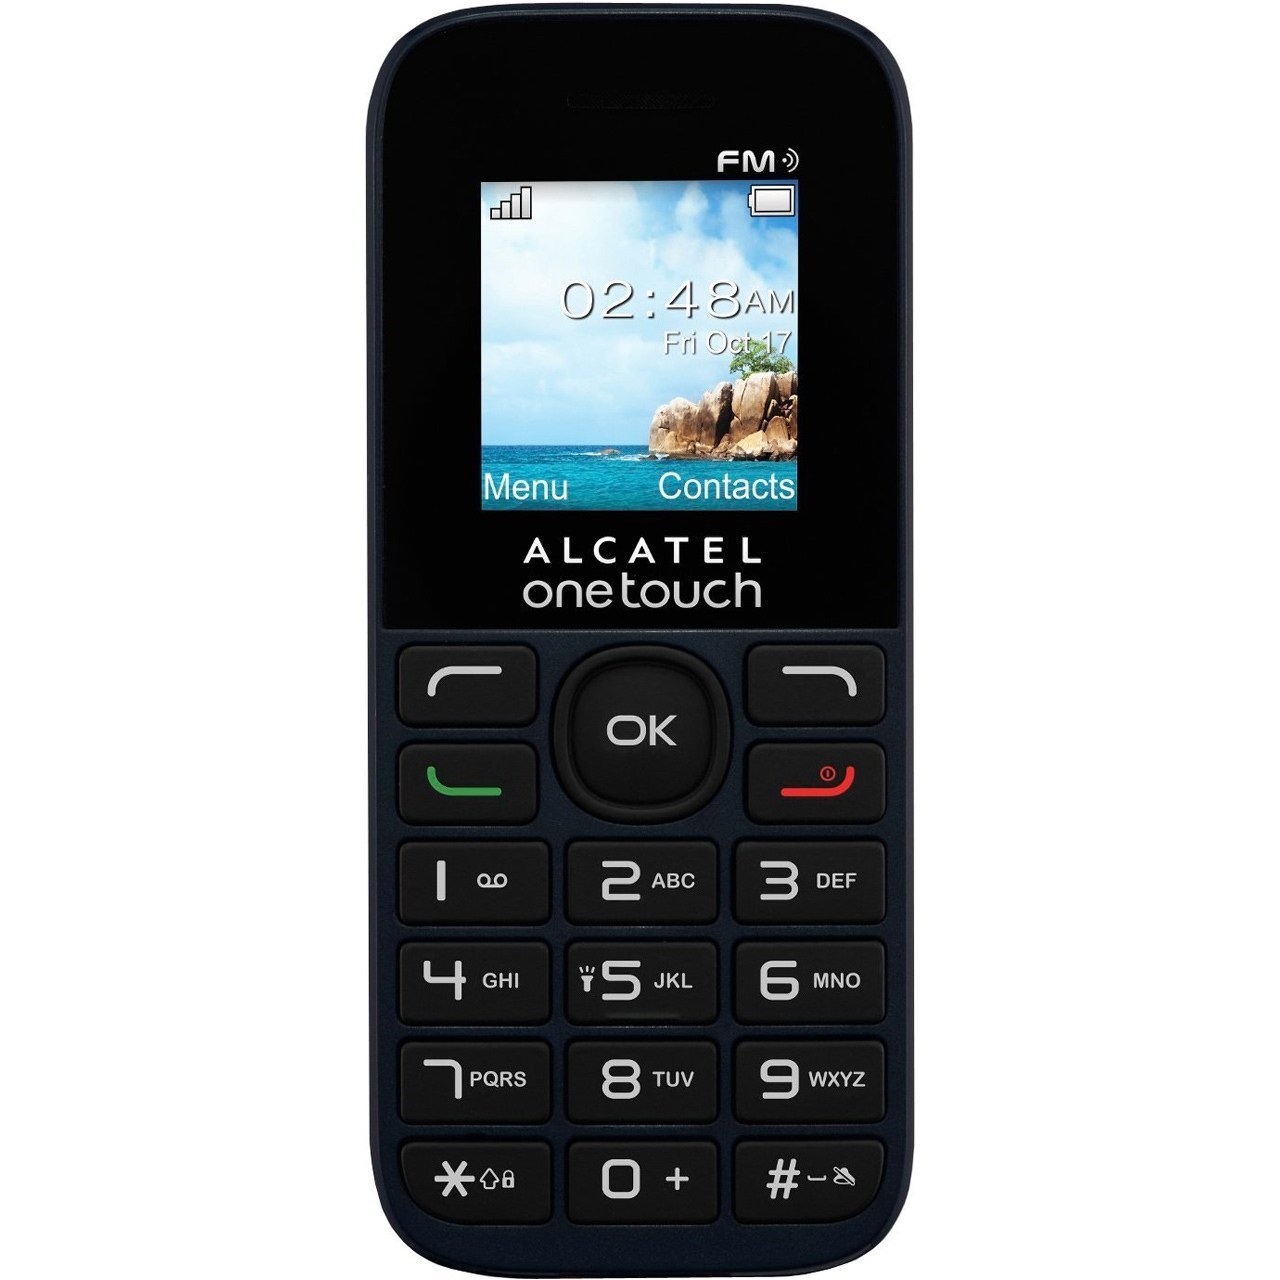 گوشی موبایل آلکاتل مدل Onetouch 1013D دو سیم کارت